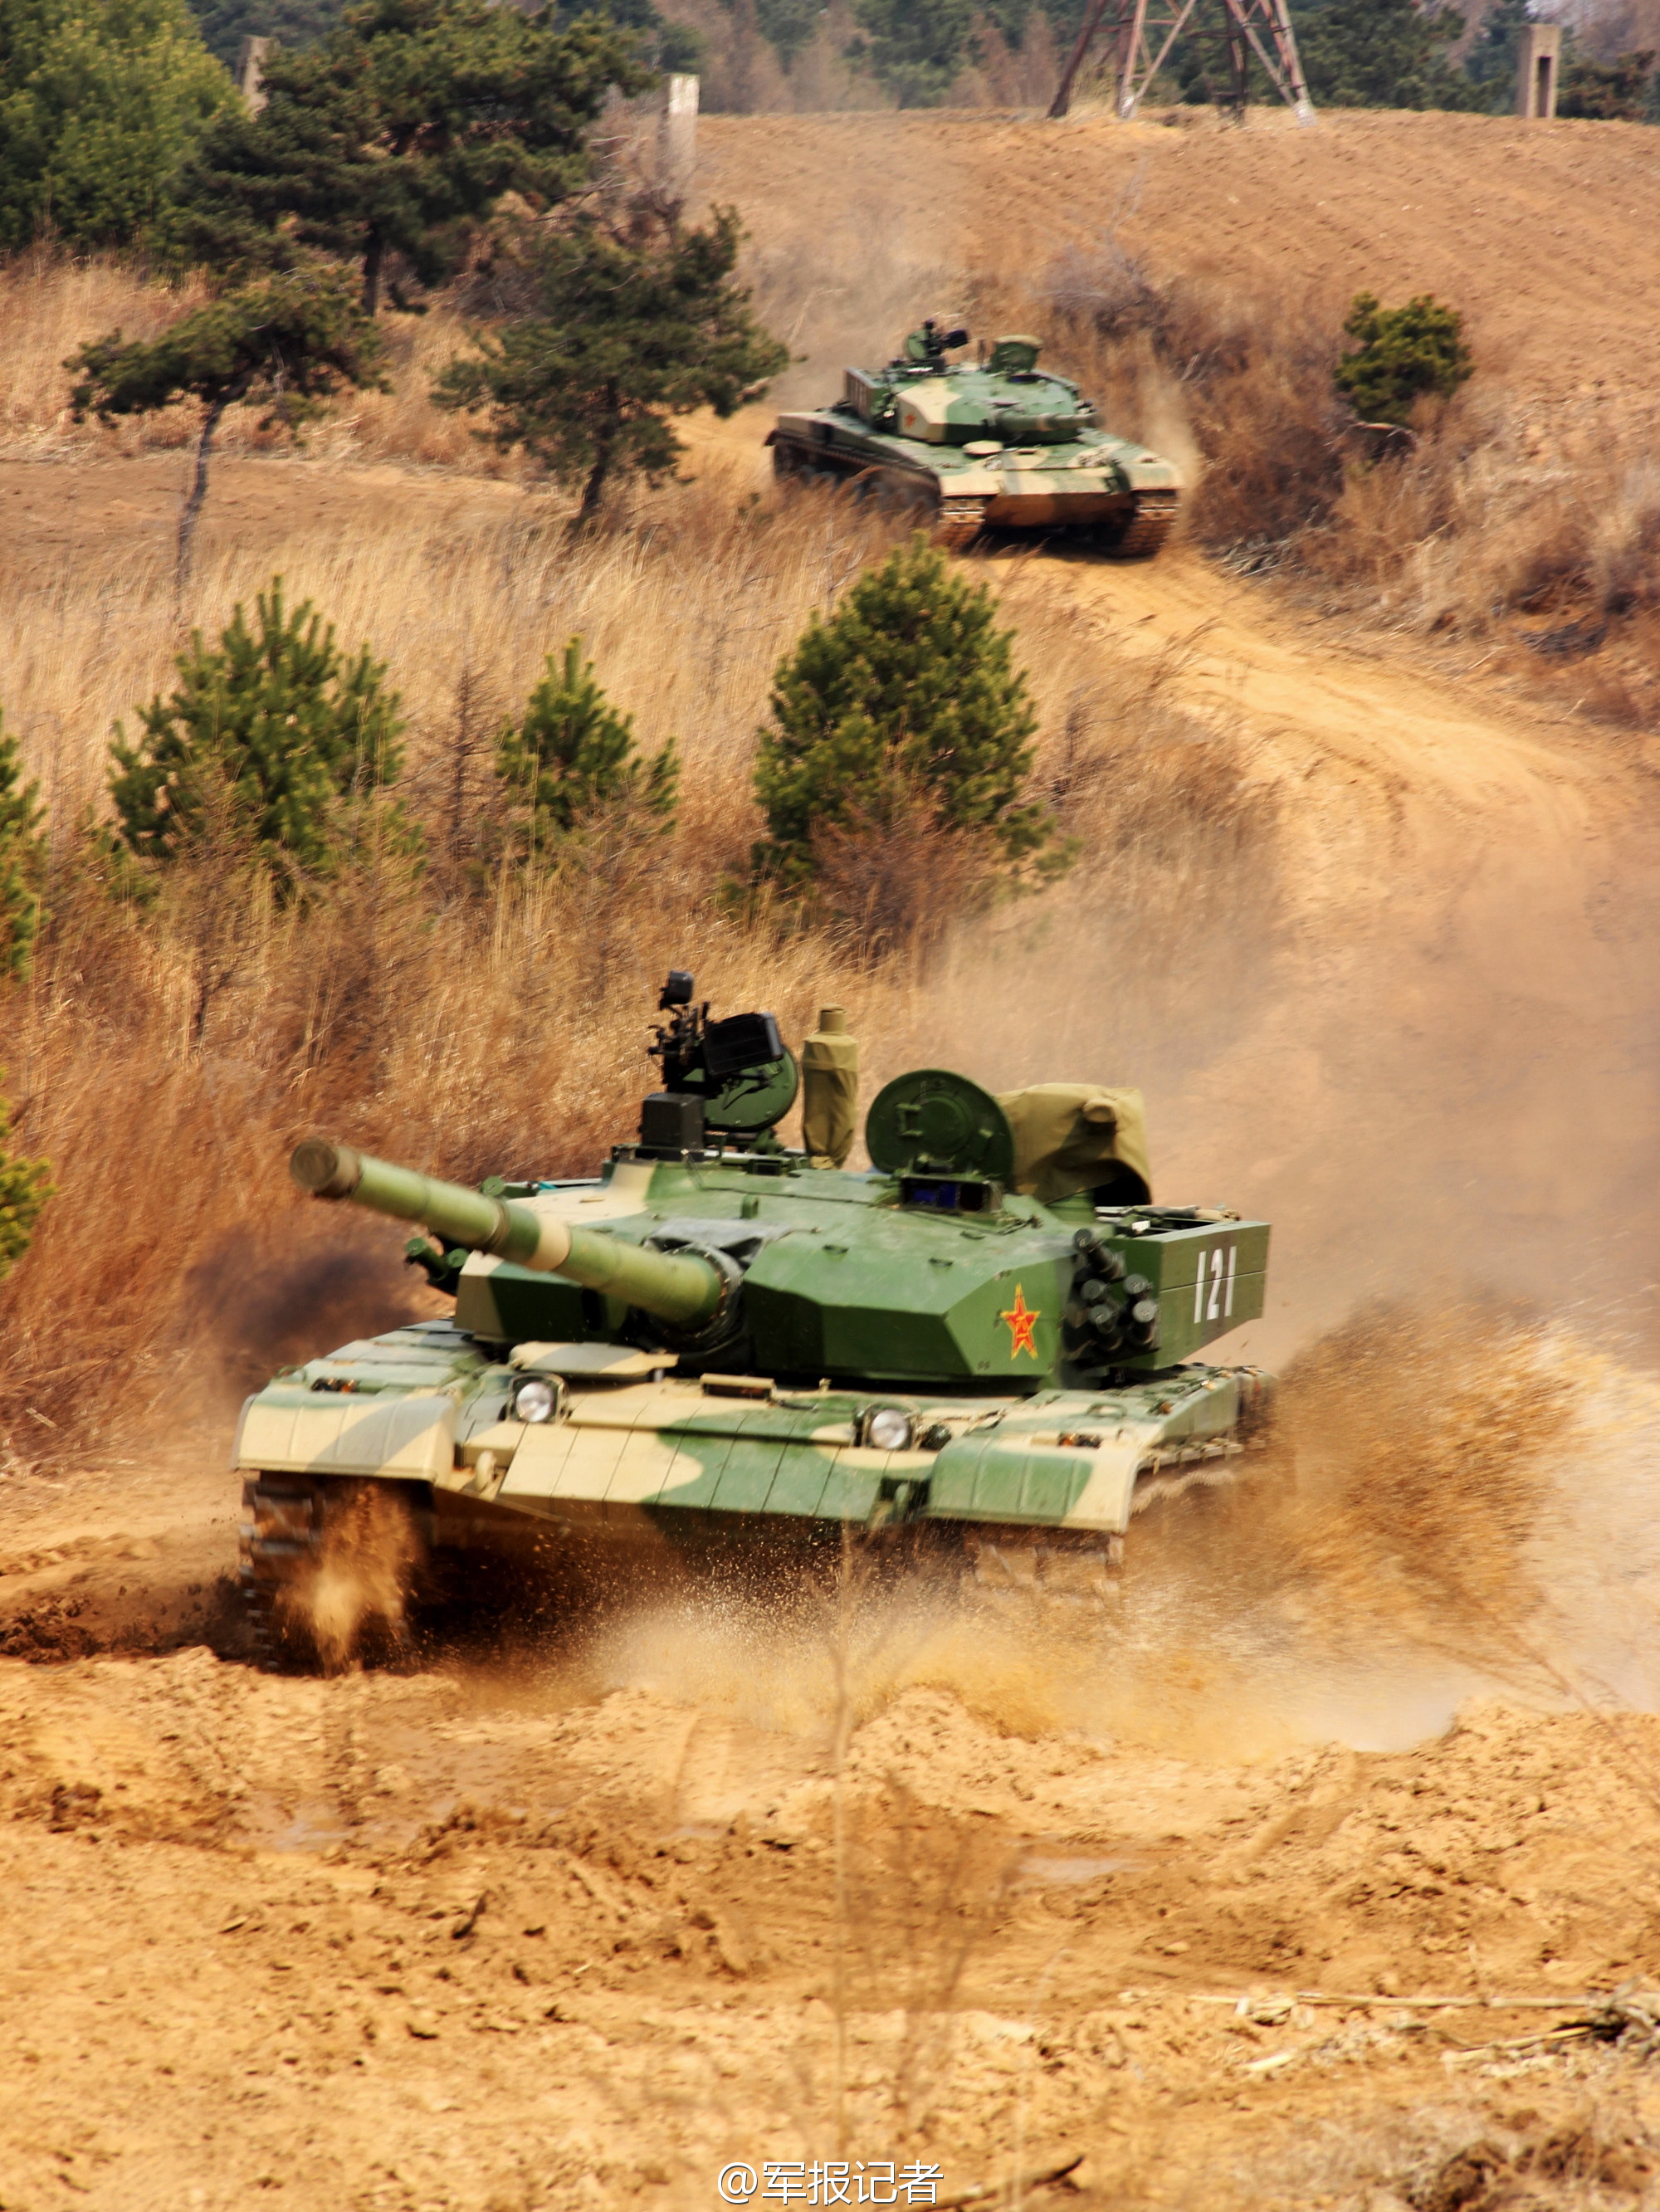 PHOTO: Chinese Tank Manoeuvre Exercise – Defence Blog